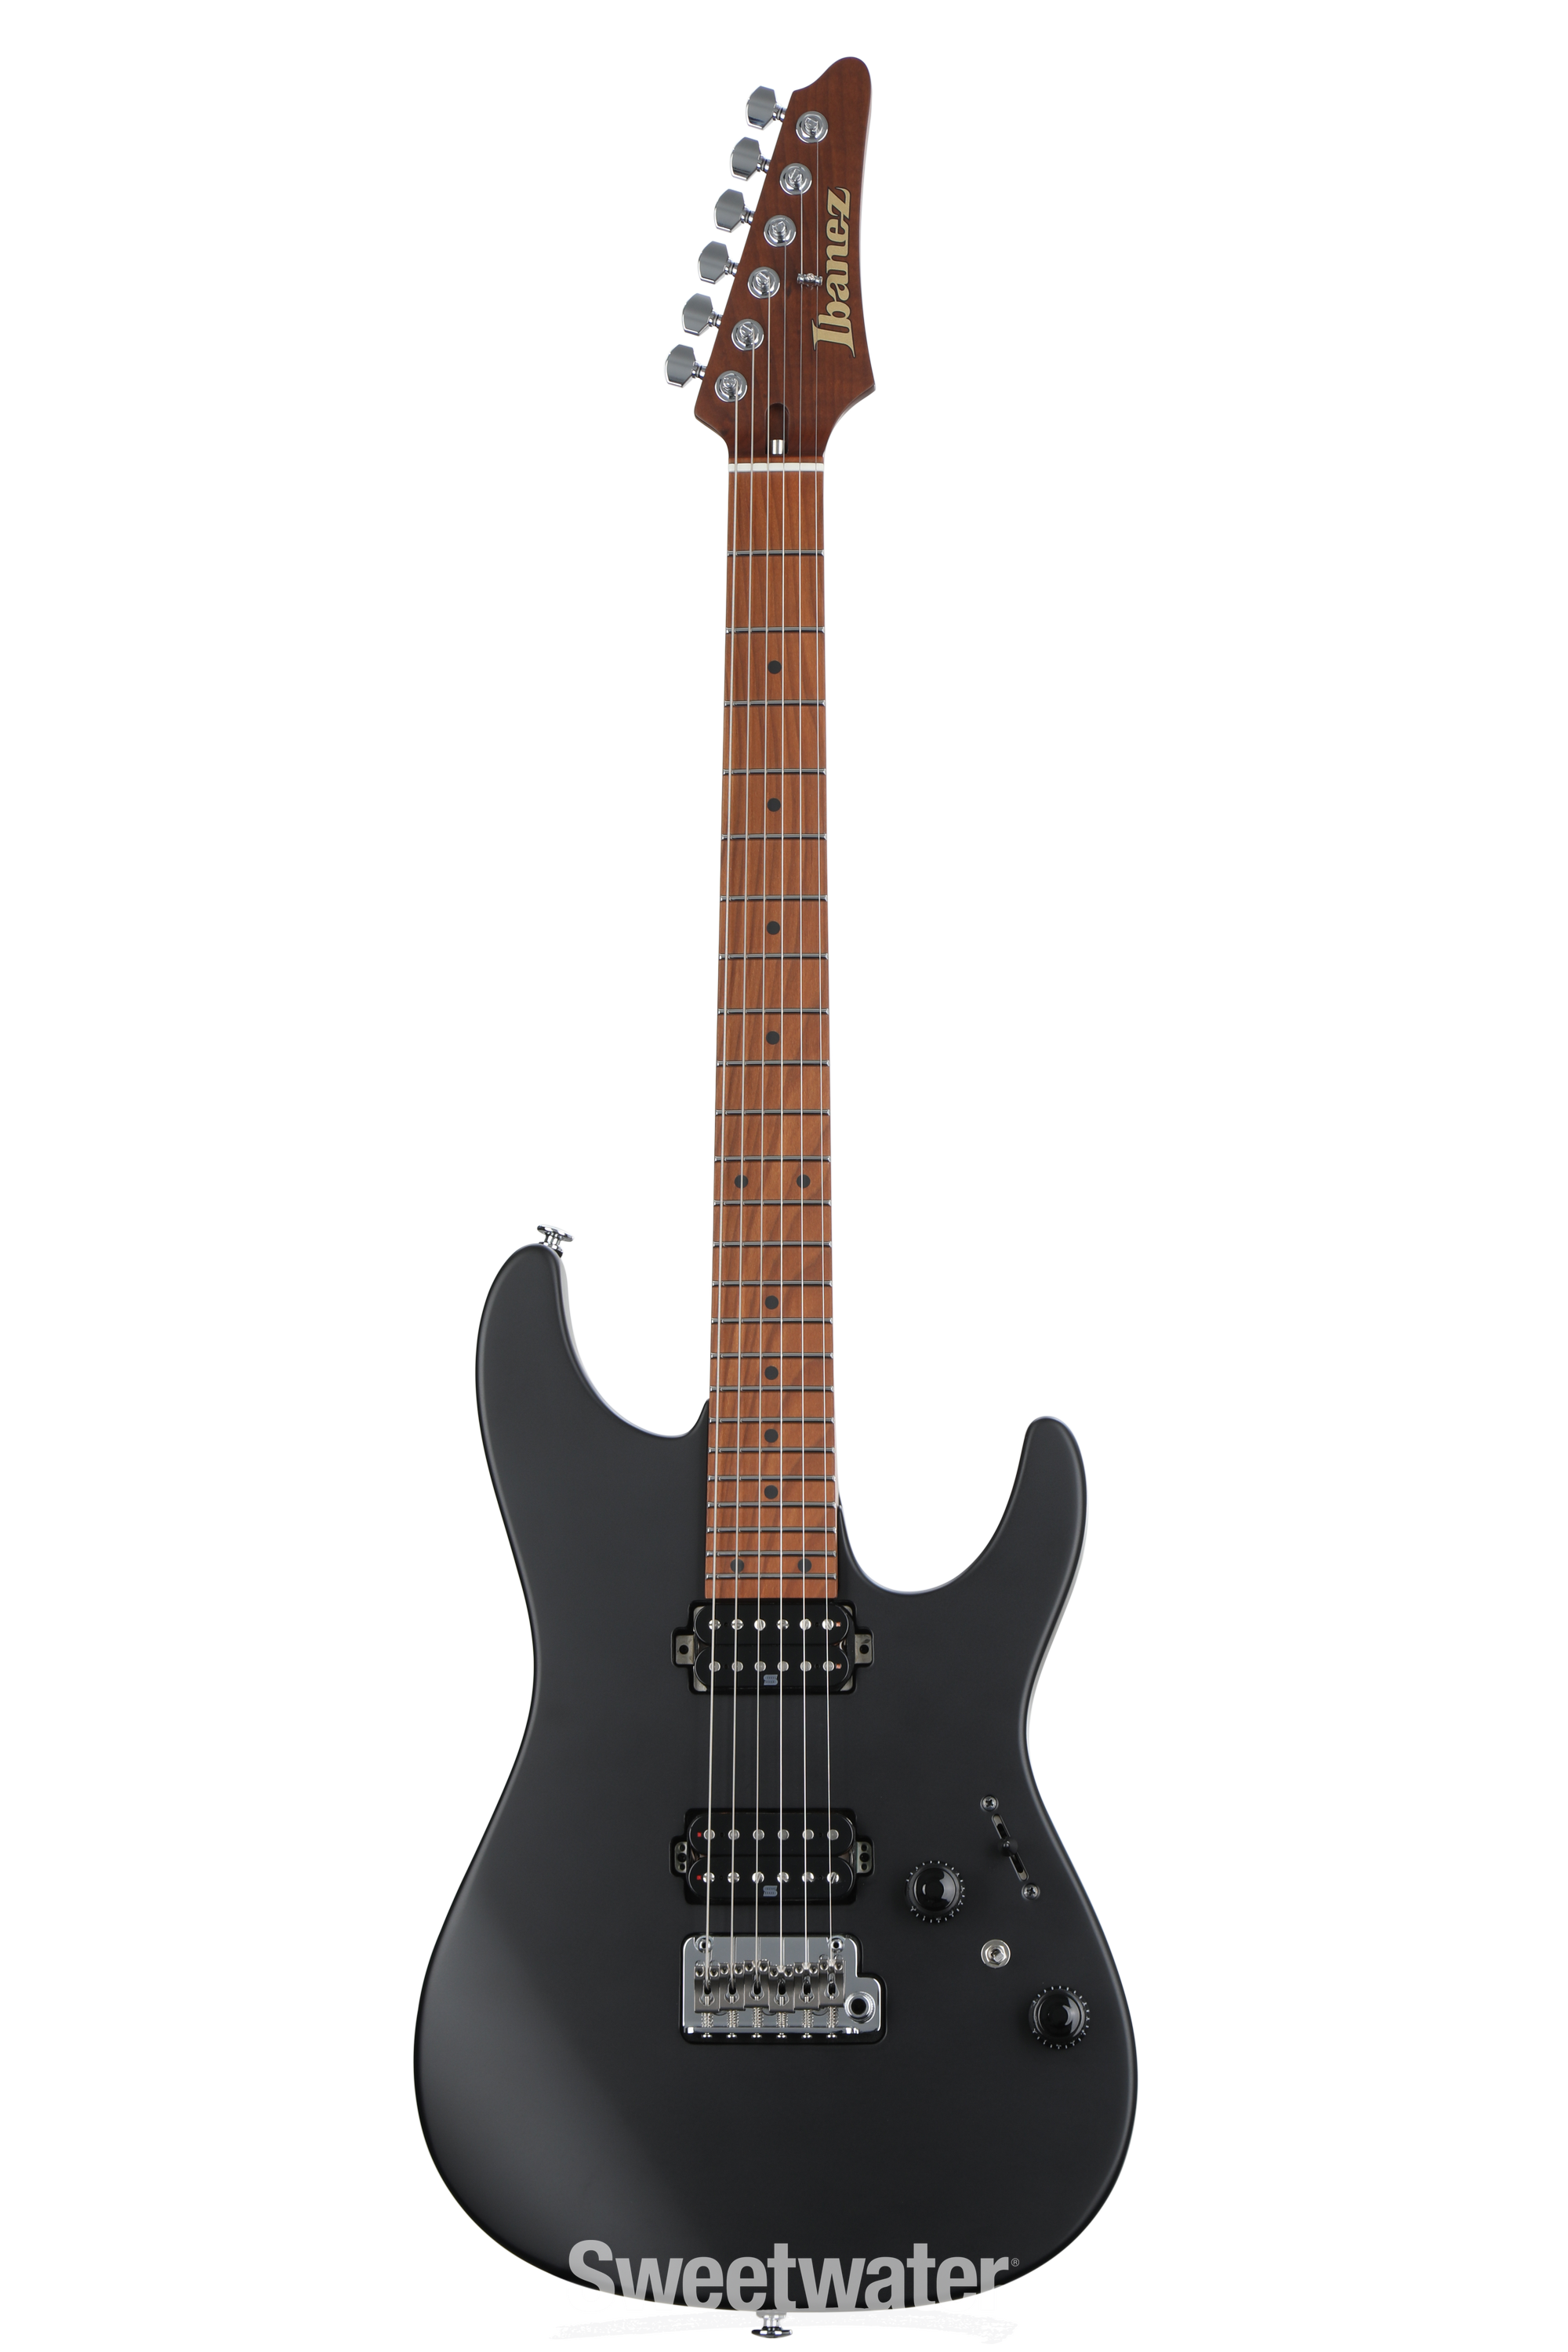 Ibanez Prestige AZ2402 Electric Guitar - Black Flat